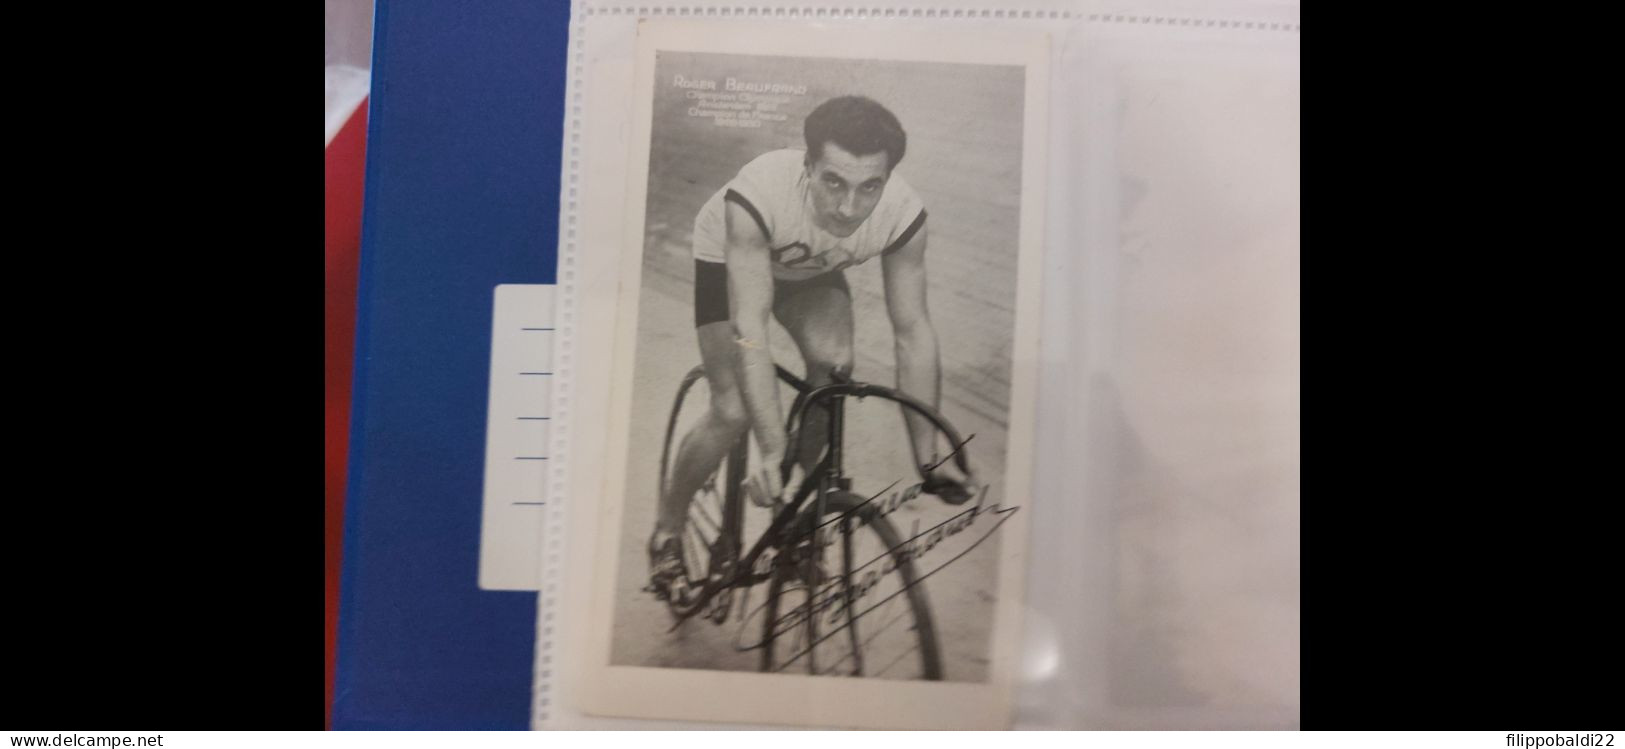 Roger Beaufrand 10x15 Autografo Autograph Signed - Cyclisme